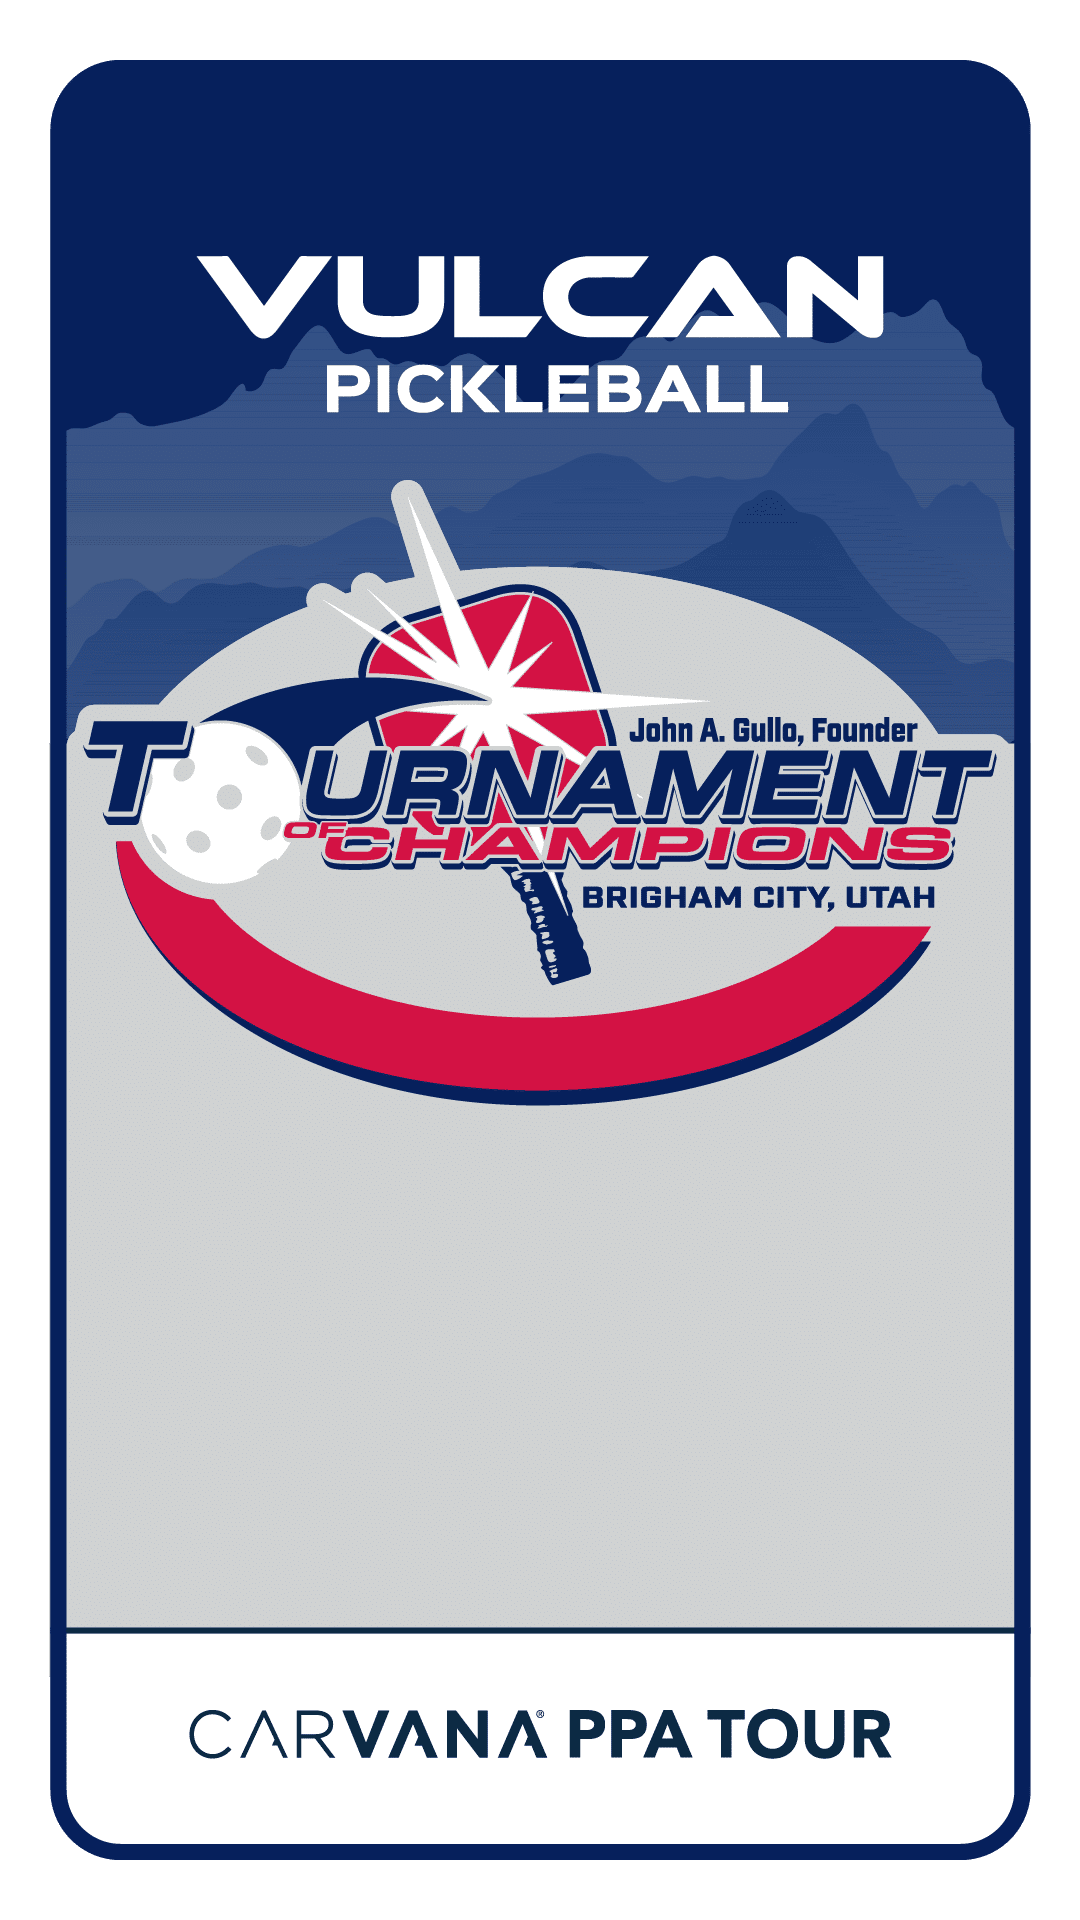 Carvana PPA Tour Vulcan Tournament of Champions